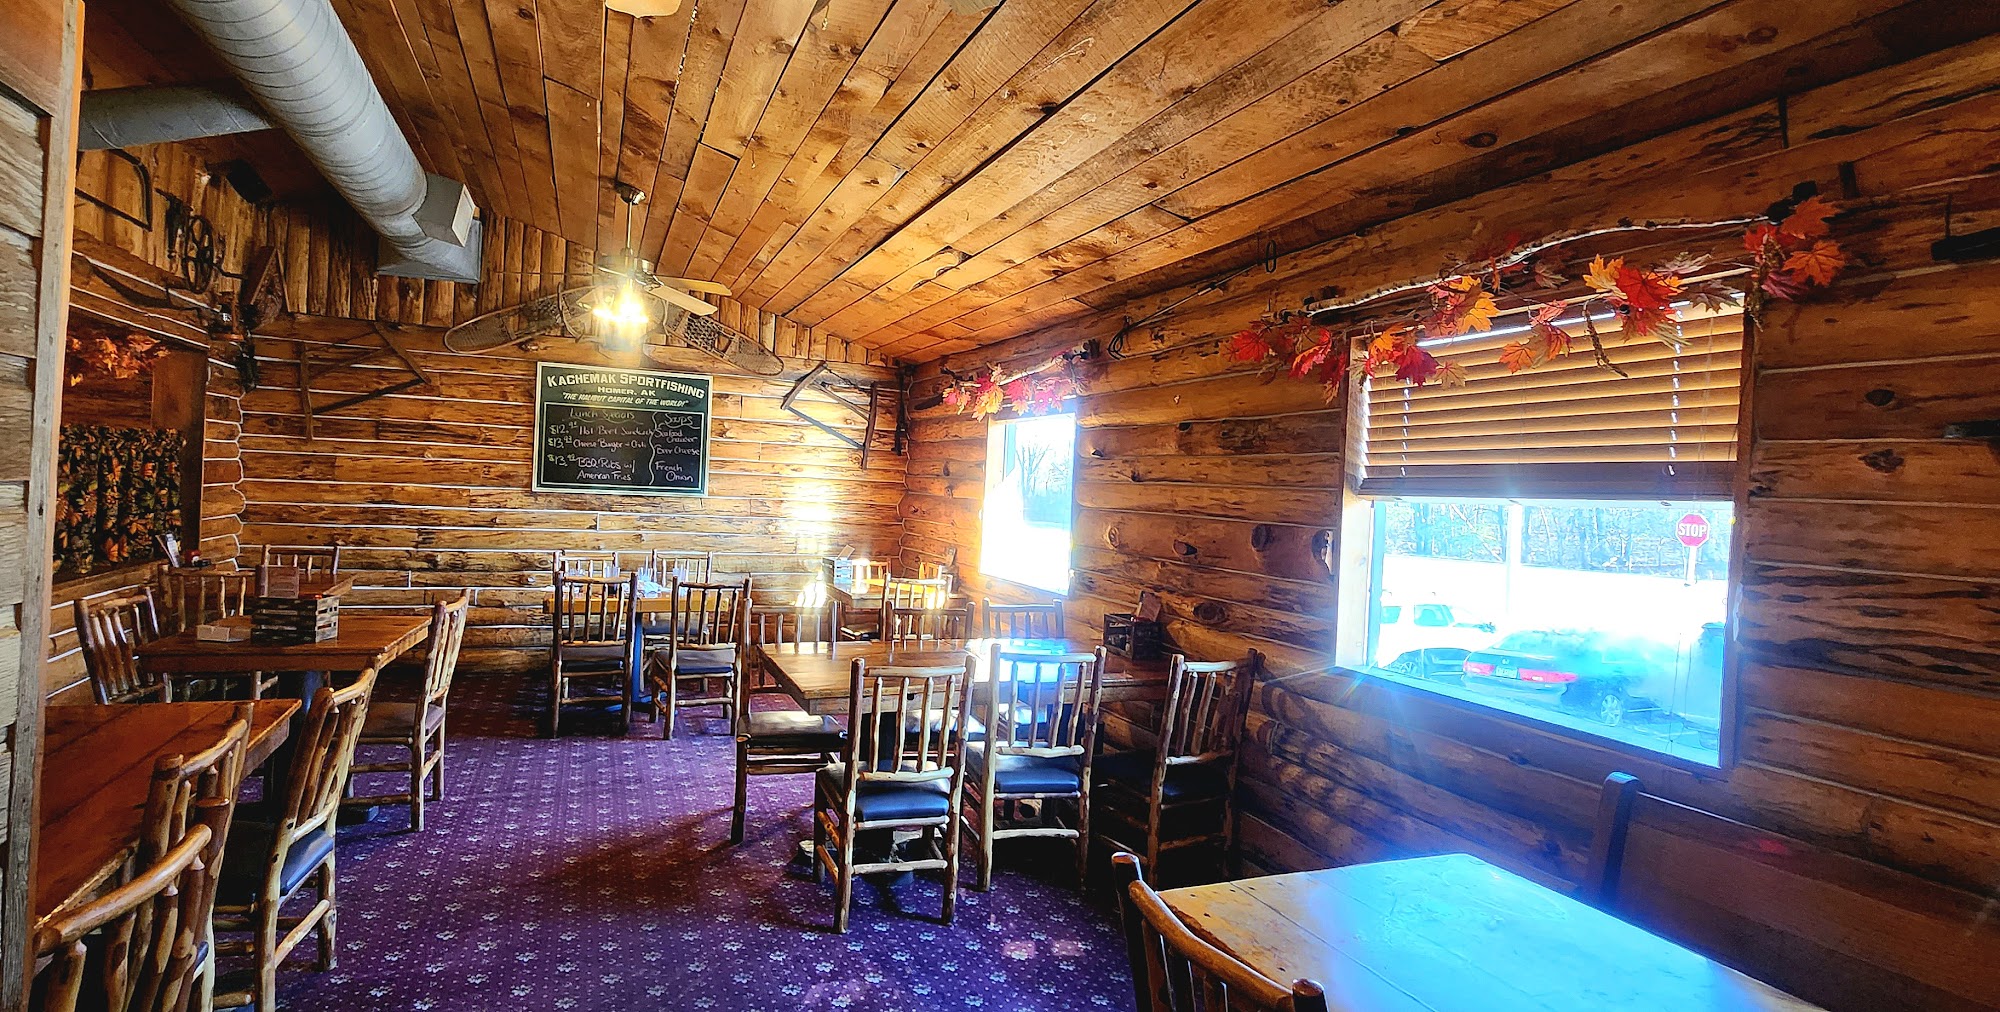 The Old Log Cabin Restaurant